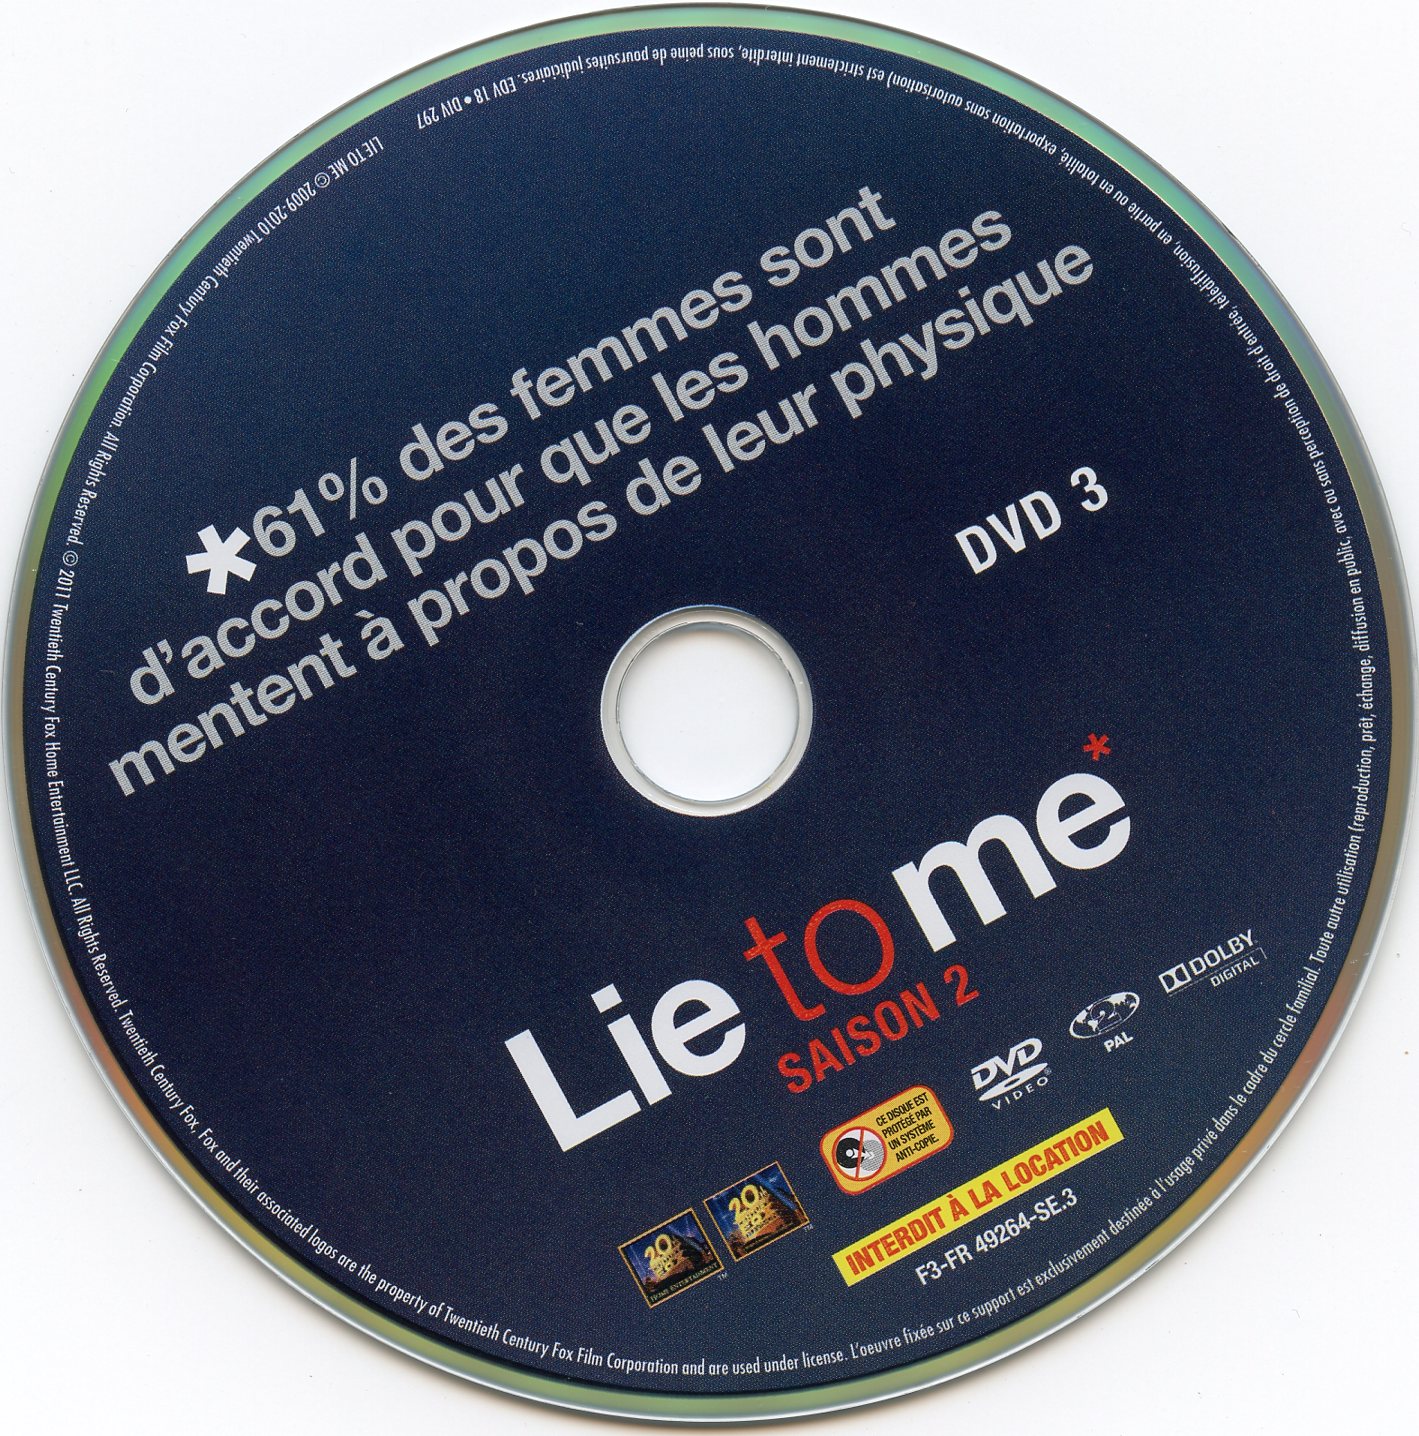 Lie to me Saison 2 DVD 3